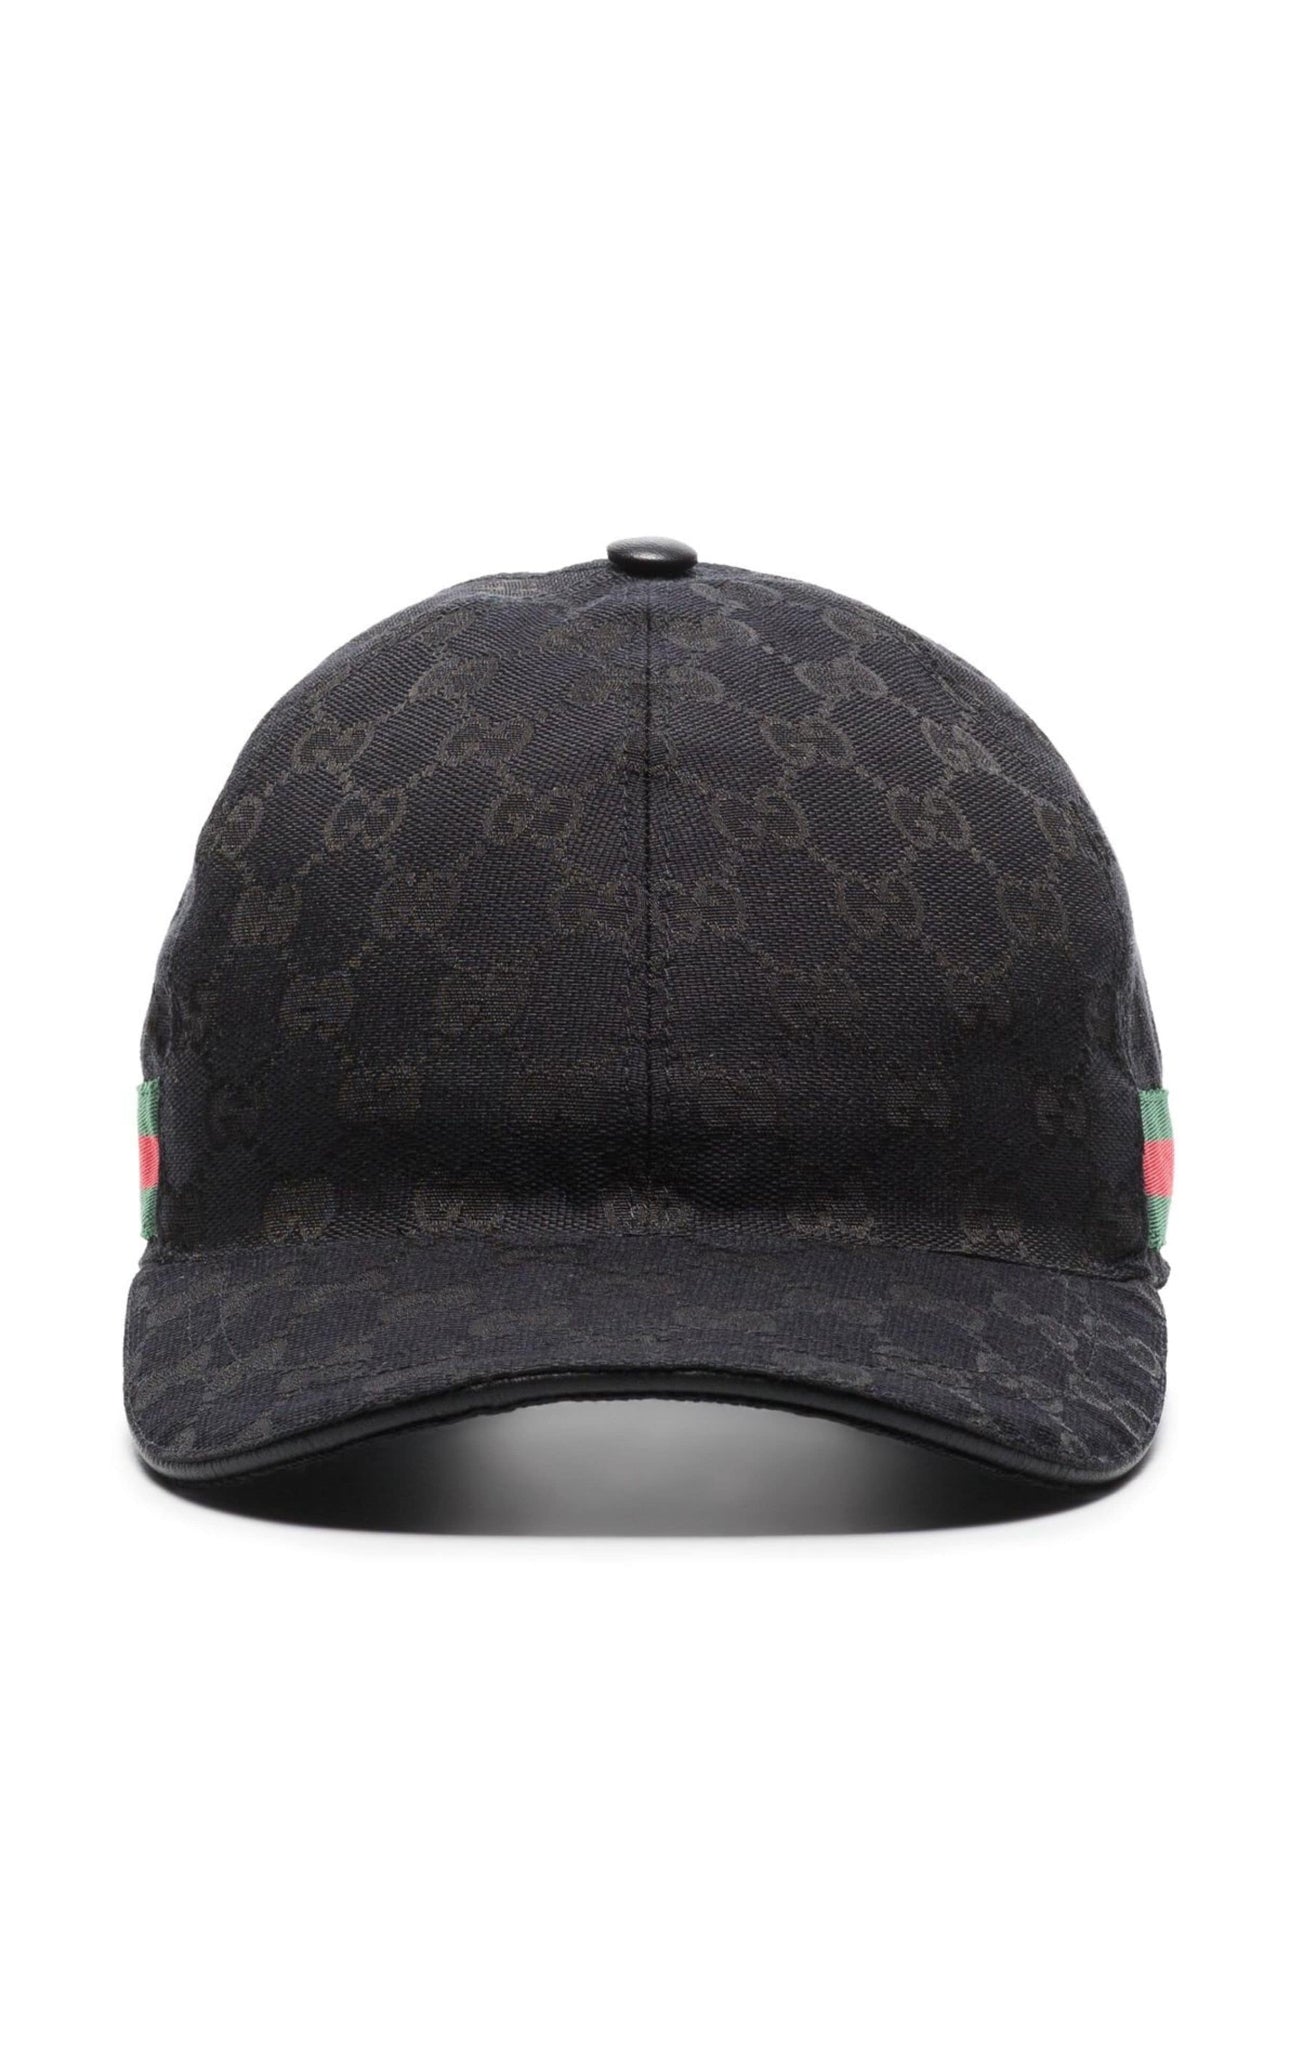 Gucci cap rental - GG Supereme WEB baseball hat